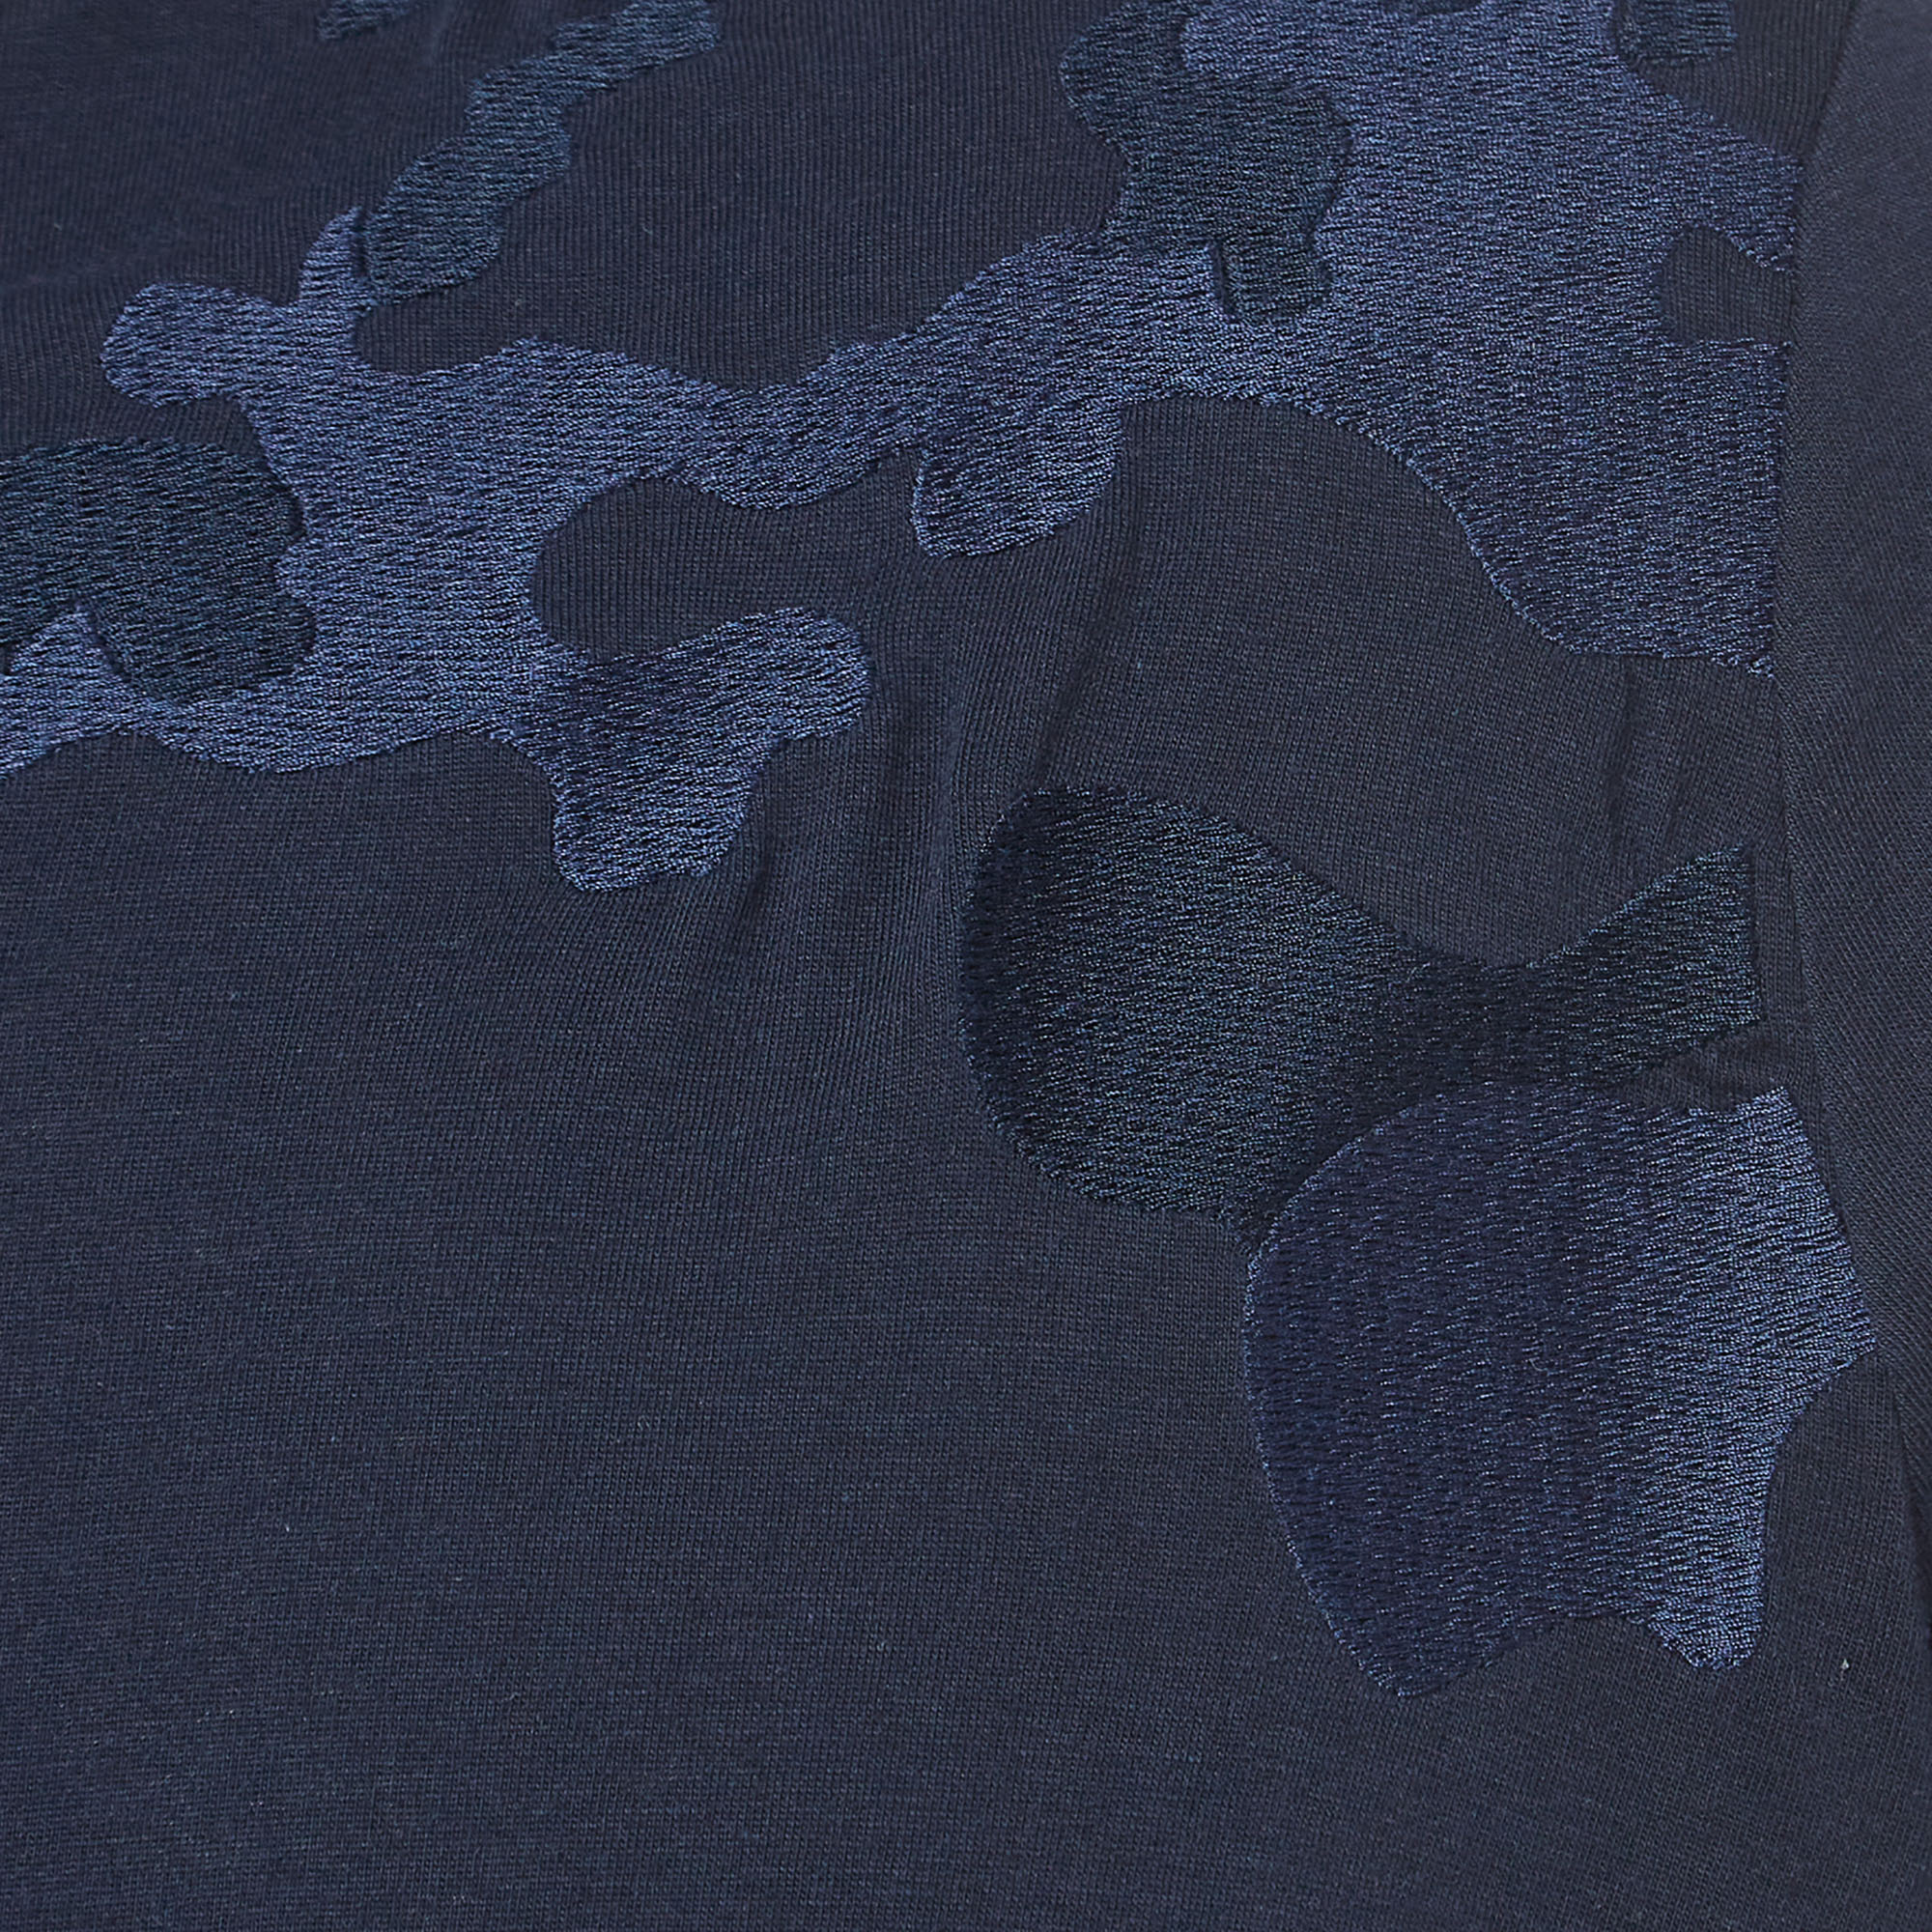 Emporio Armani Navy Blue Embroidered Cotton T-Shirt 2XL